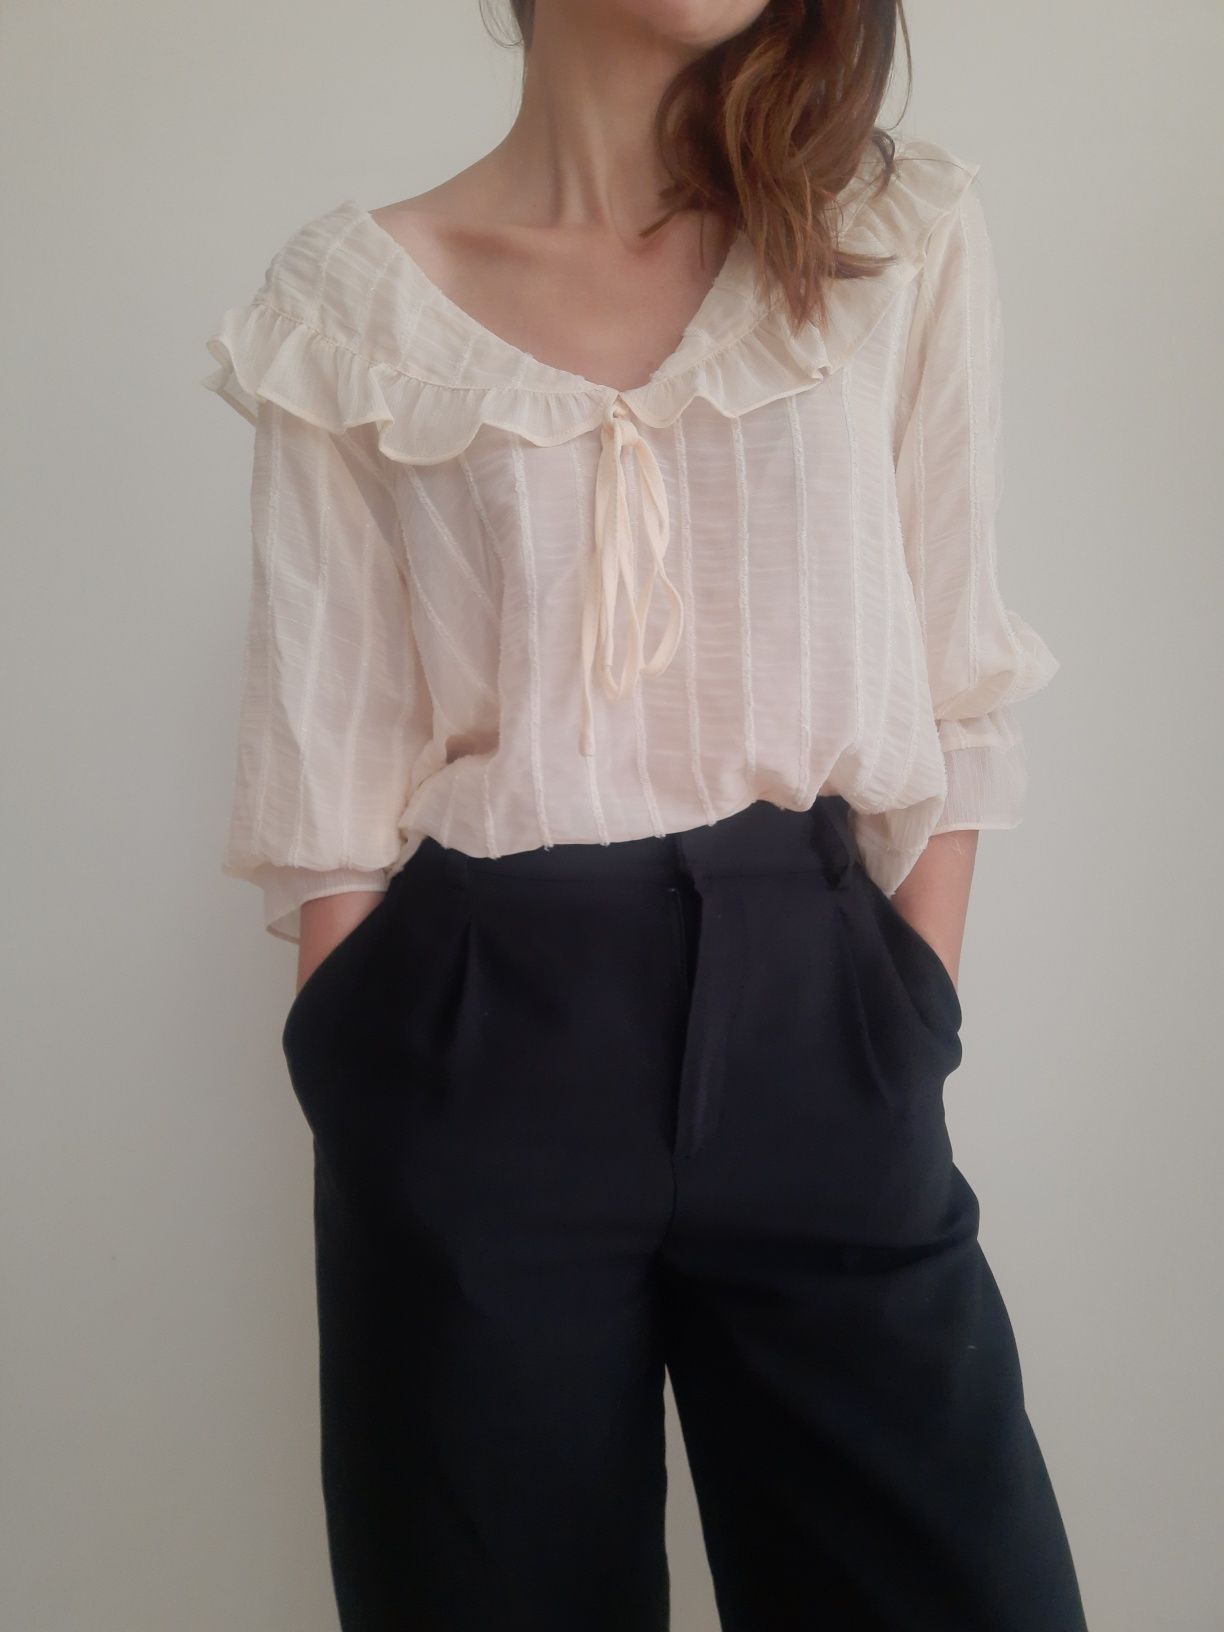 Zara Зара блуза / топ / риза, Топ New Look, Gina tricot.